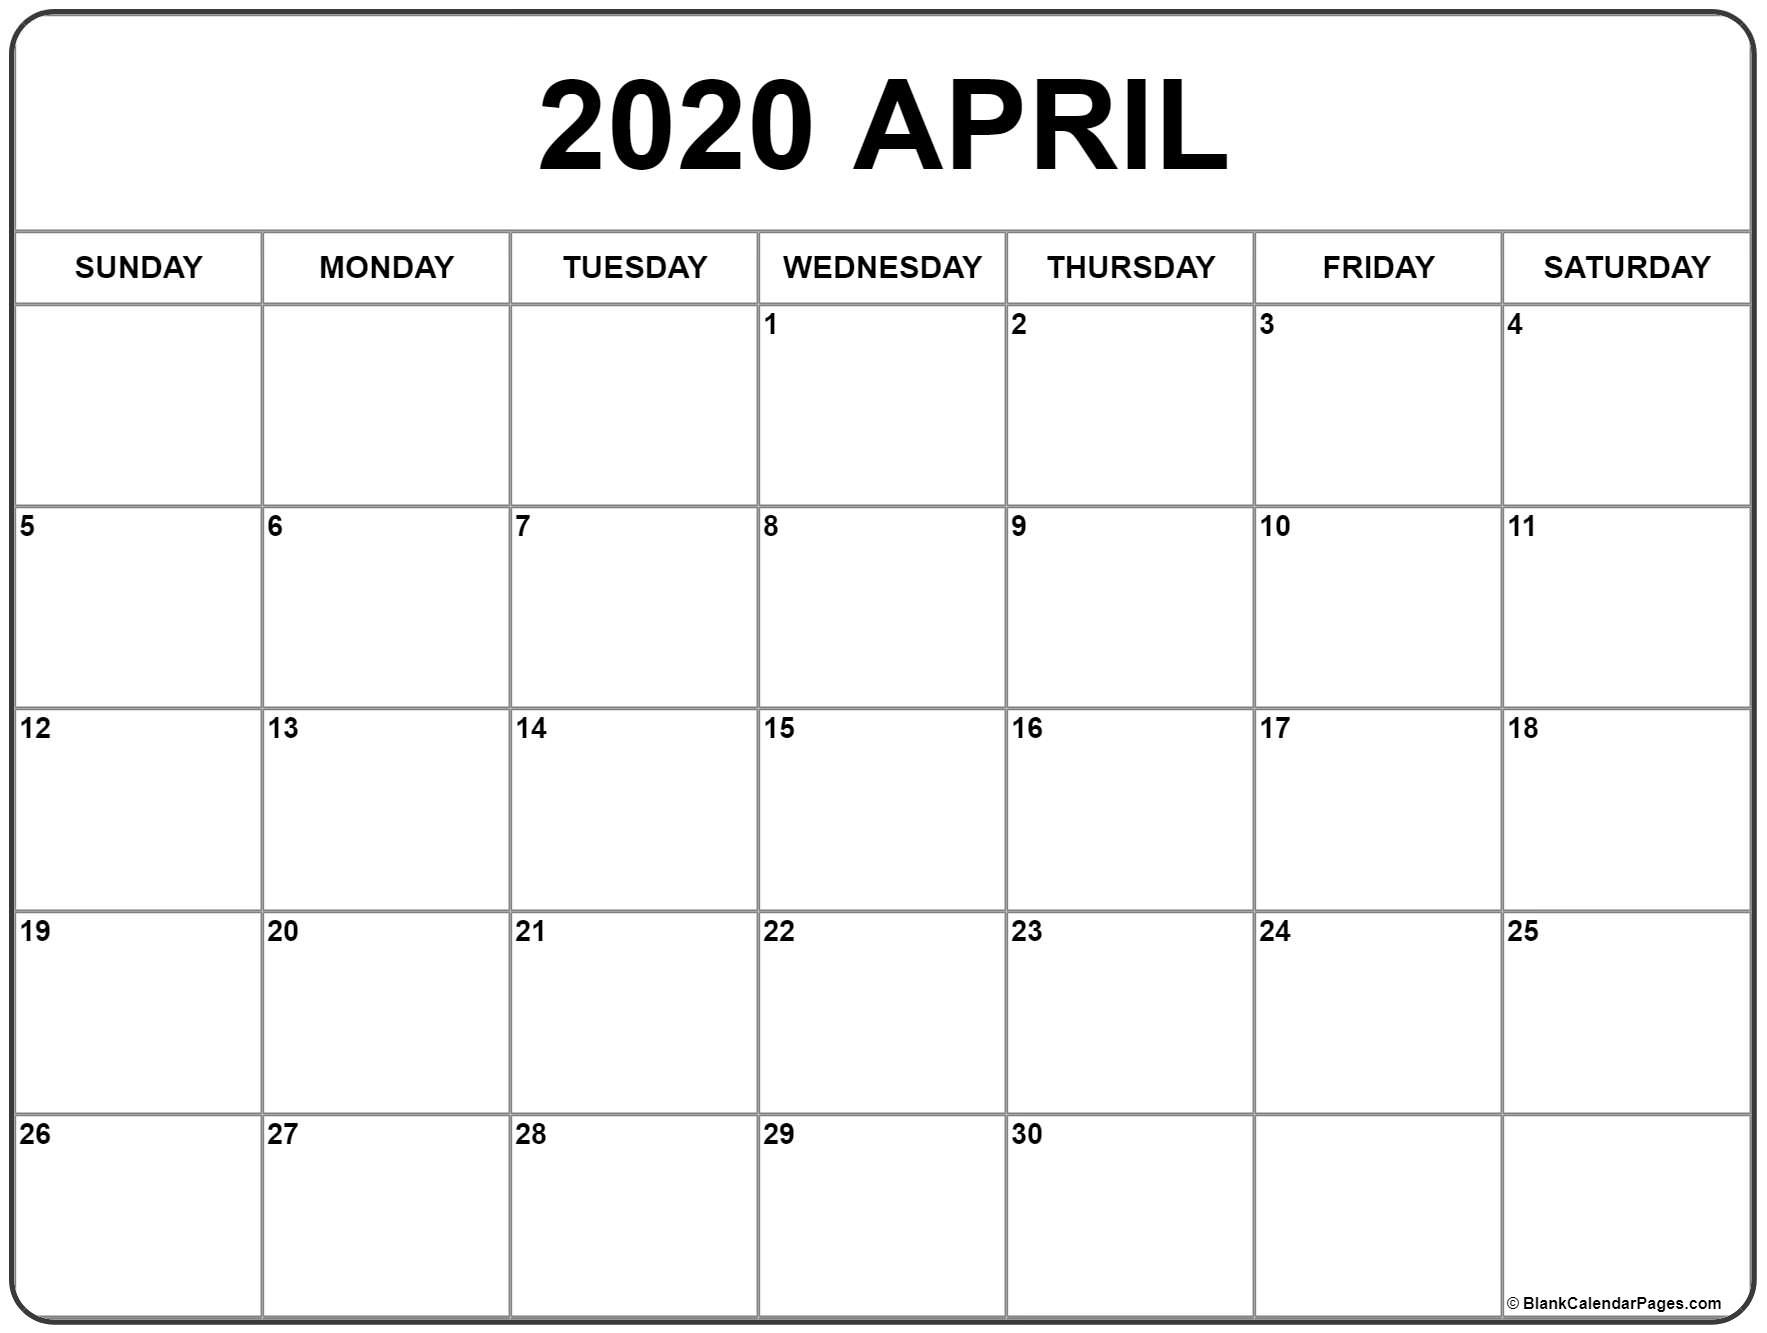 April 2020 Calendar | Free Printable Monthly Calendars-Printable Monthly Calendar 2020 To Pay Monthly Bills